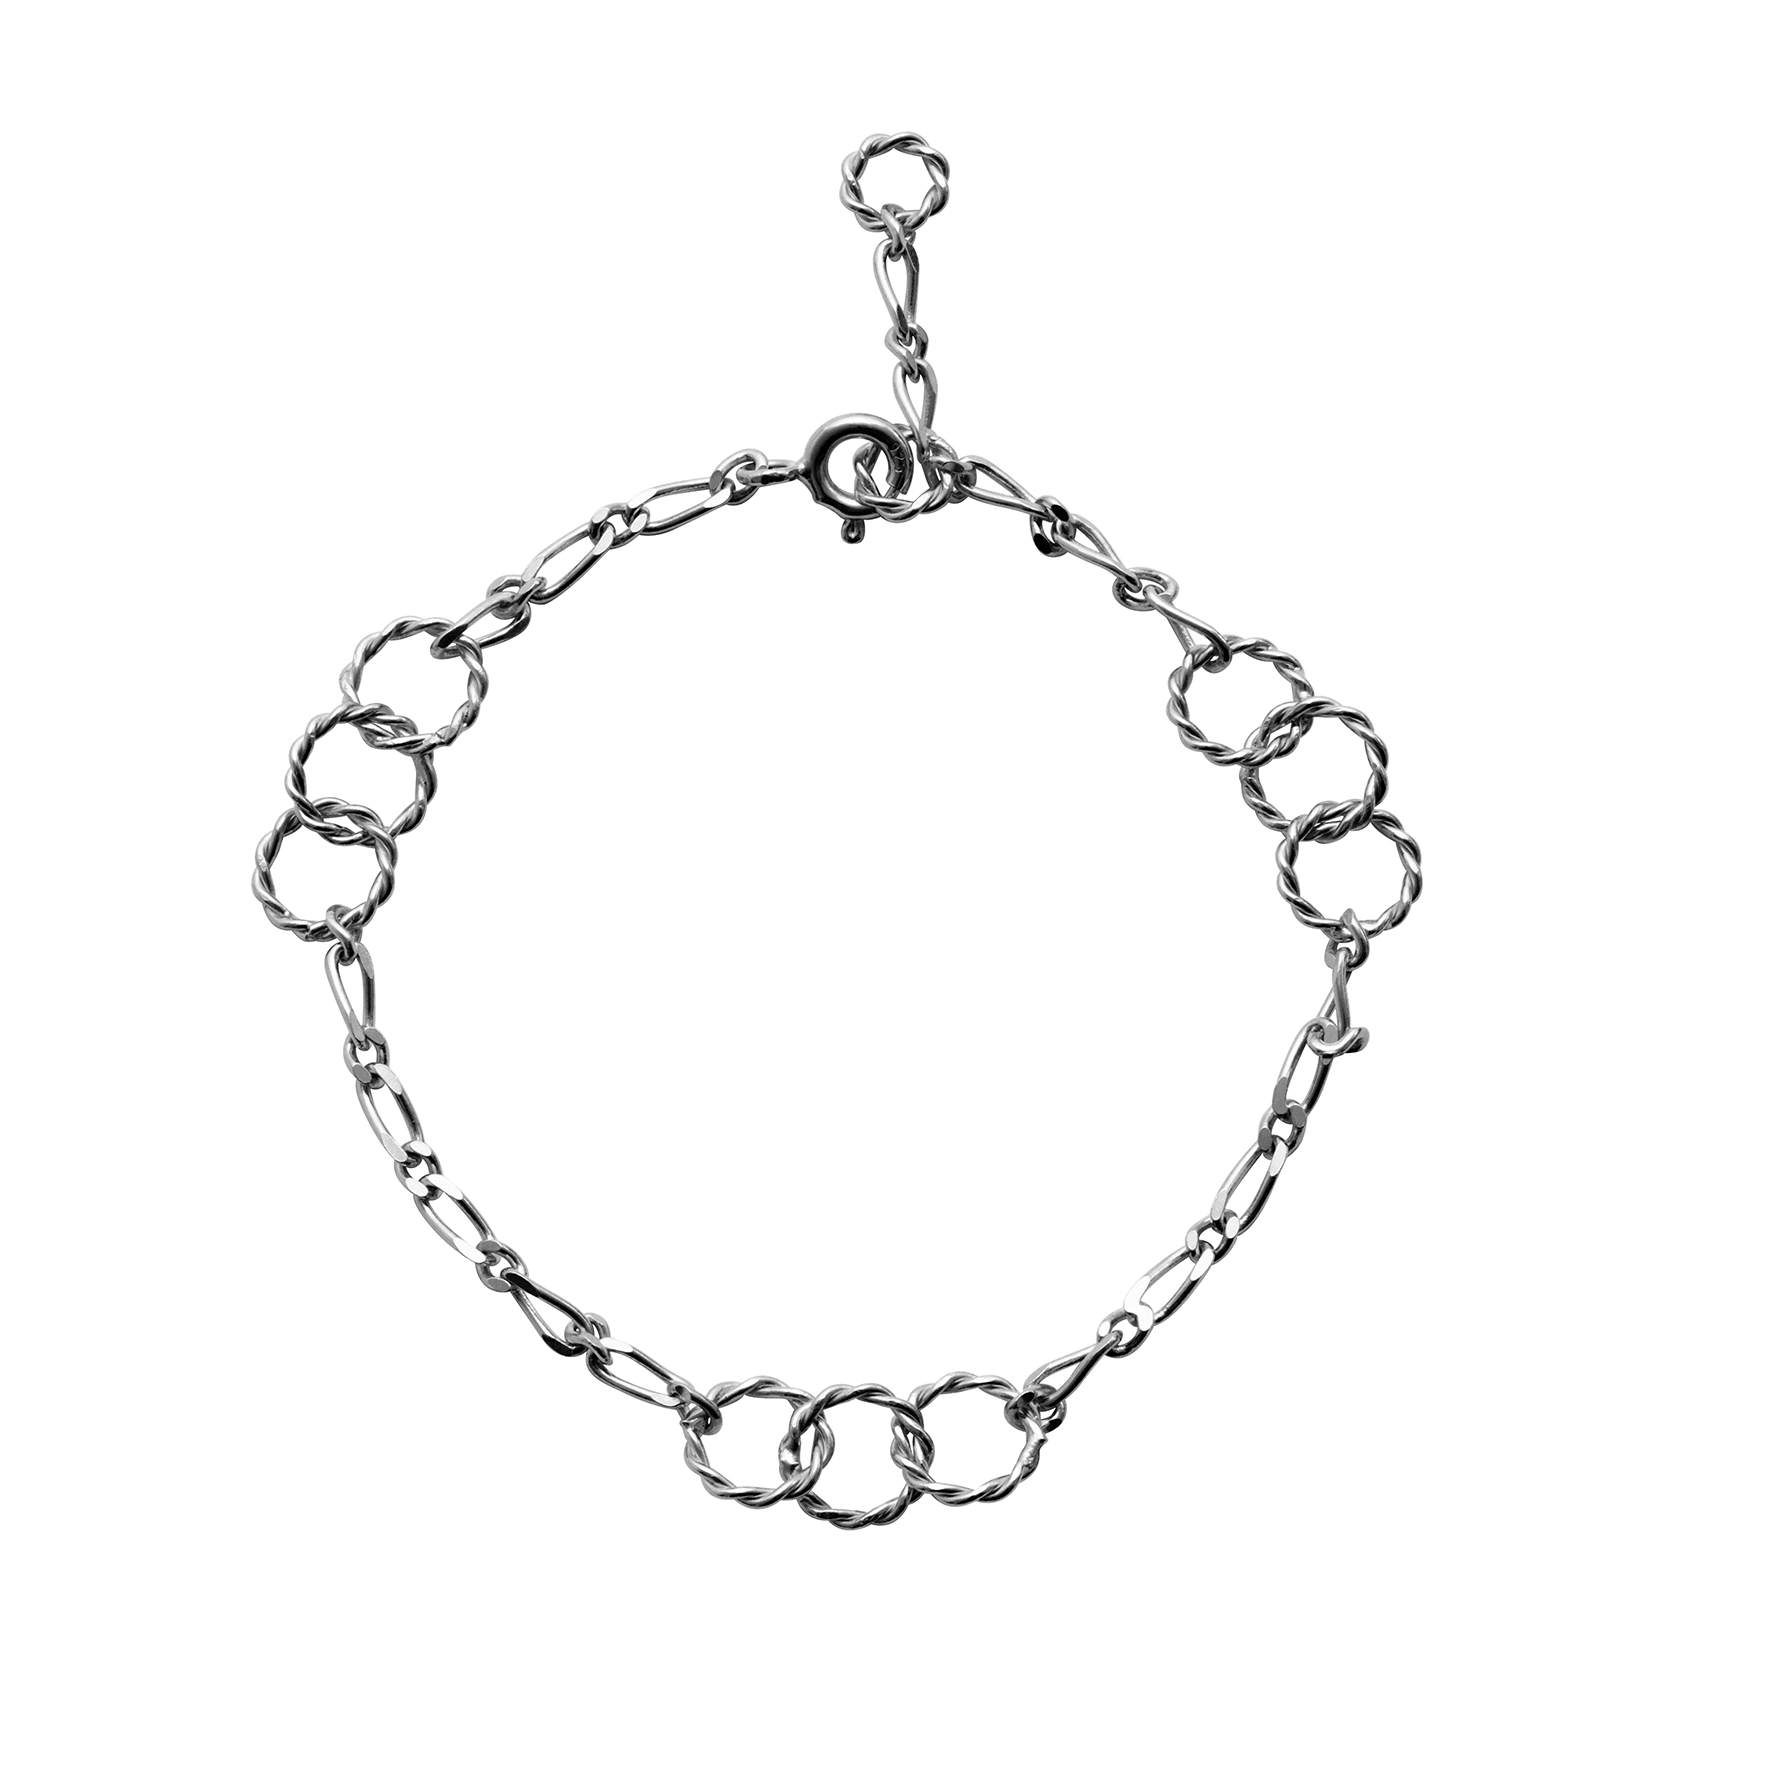 Peia bracelet von Maanesten in Silber Sterling 925|Blank